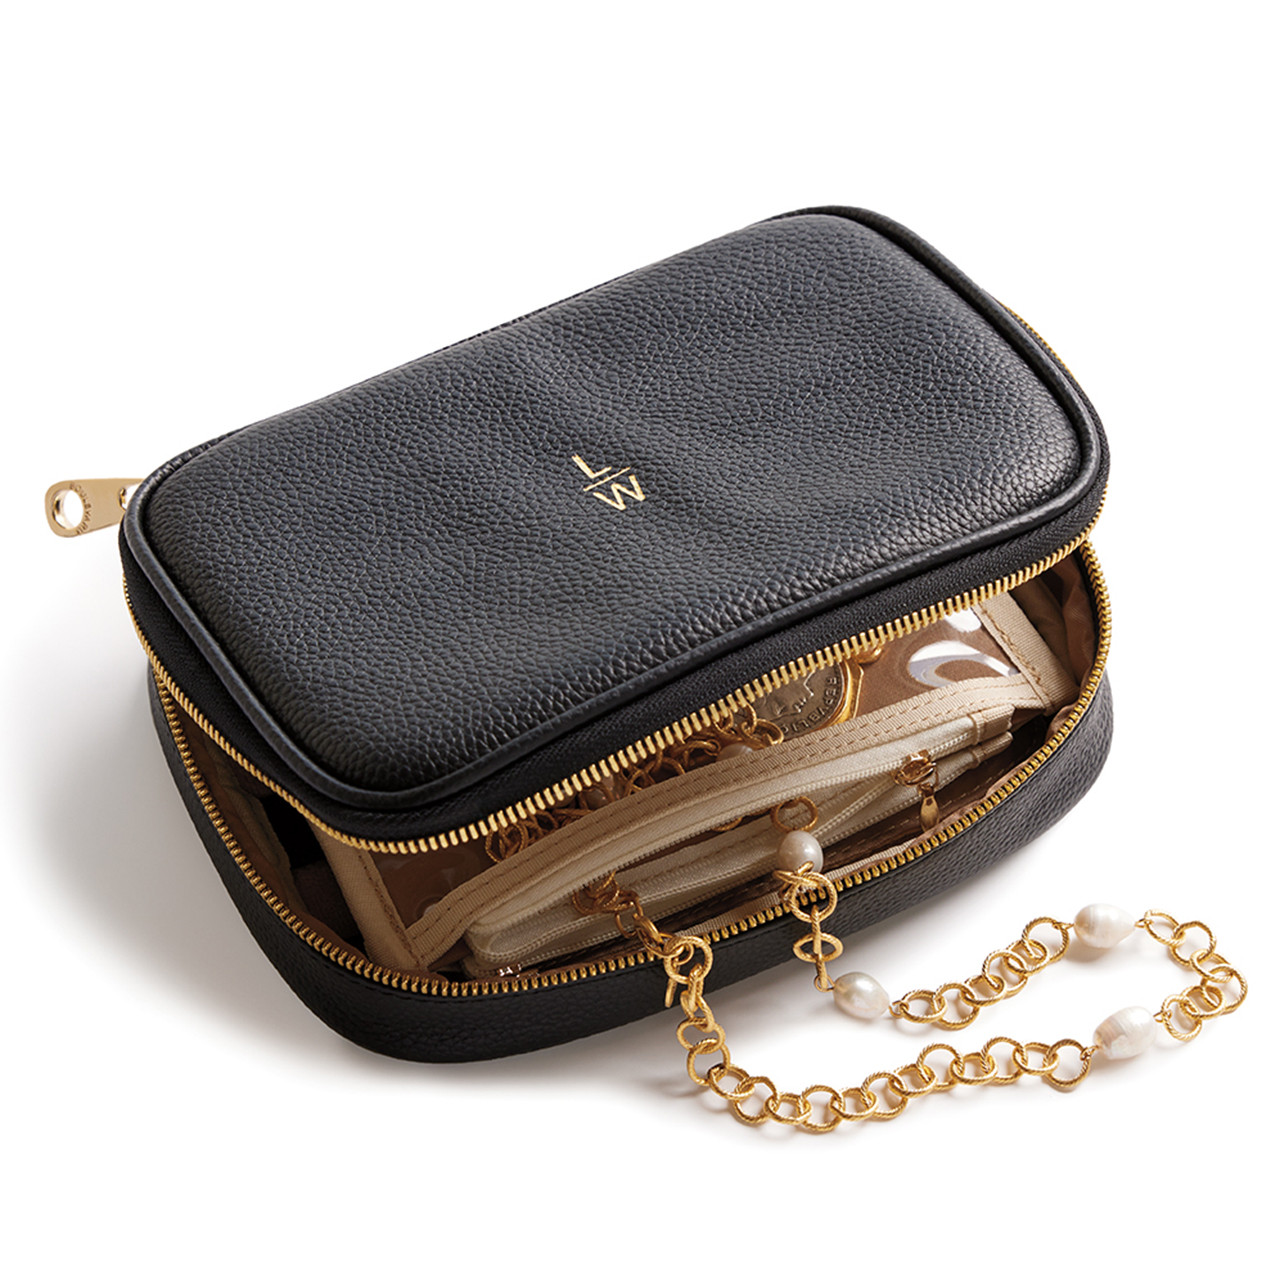 Leather Travel Jewelry Case,leather Jewelry Storage,personalized